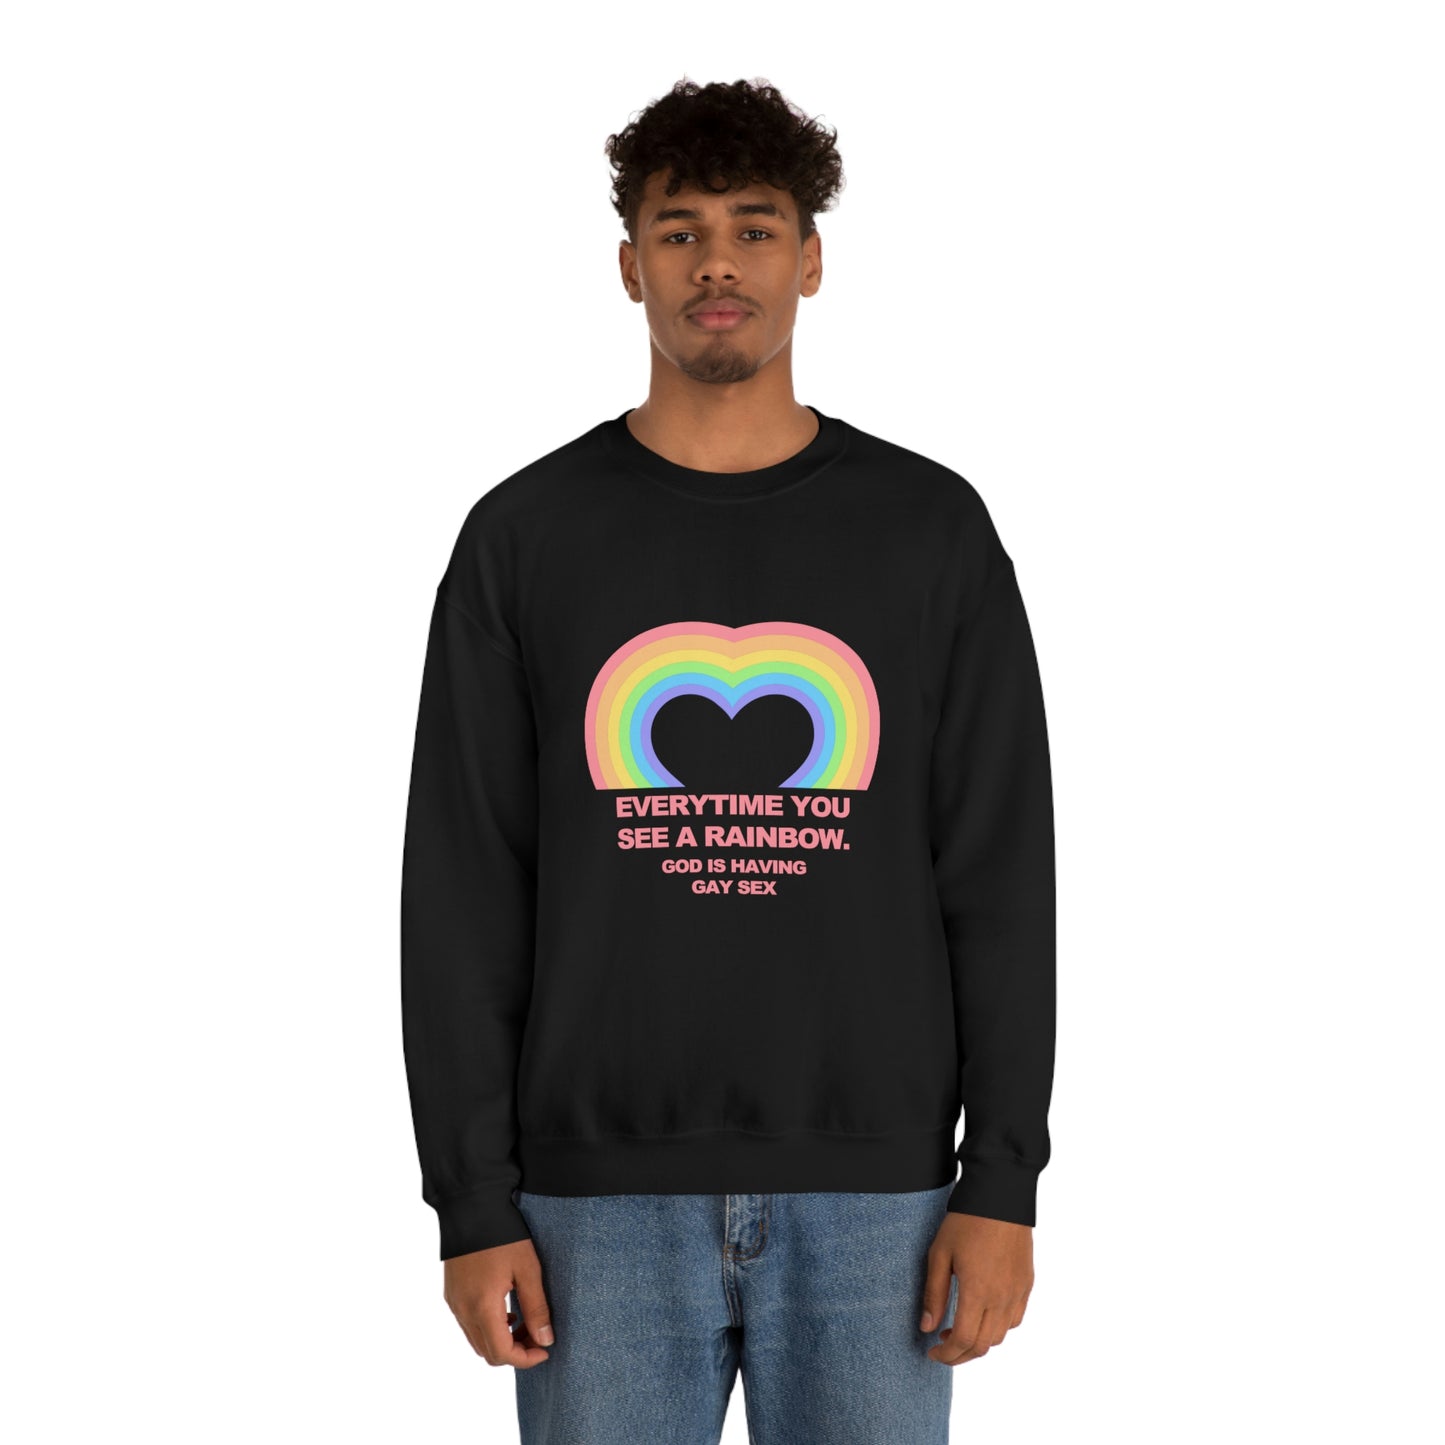 Everytime you see a rainbow, god is having gay sex Sweatshirt